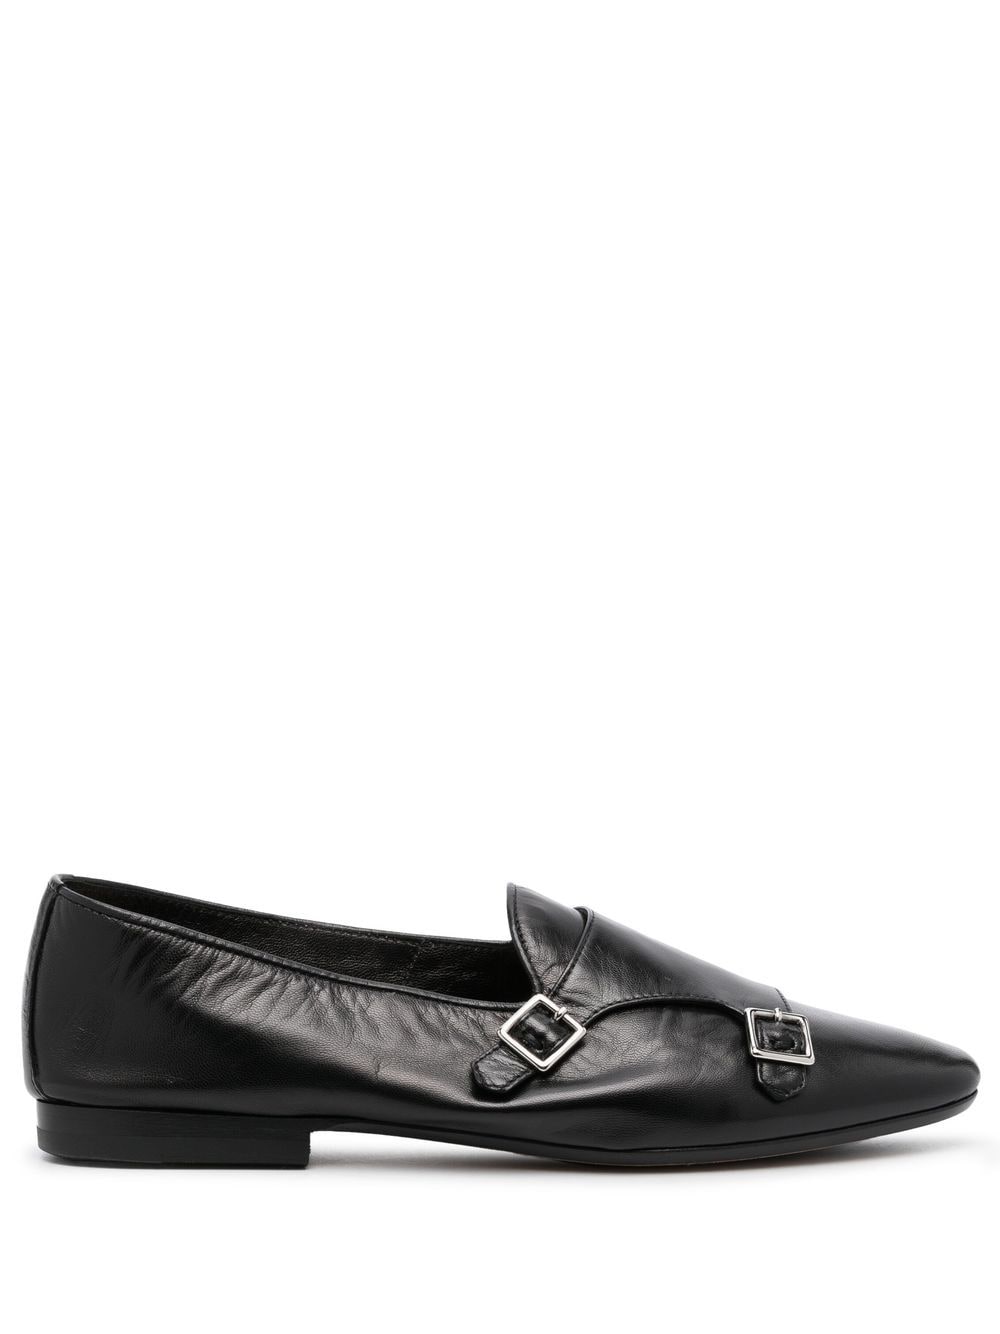 Henderson Baracco buckle detail leather slippers - Black von Henderson Baracco